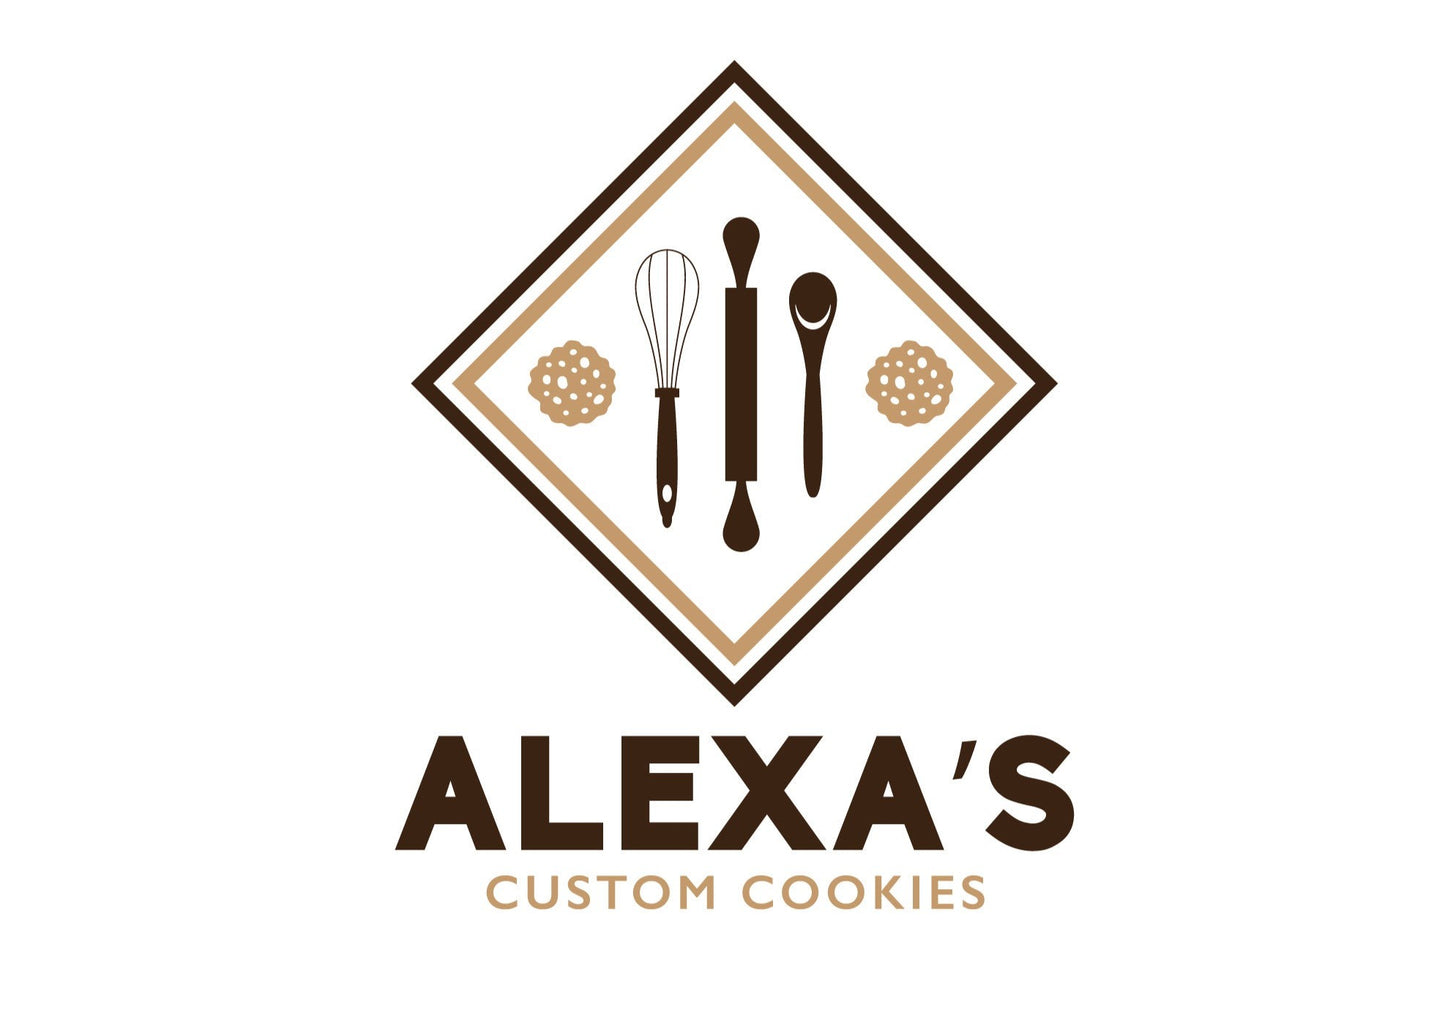 Logo Design - Bakery | Cookies | Baker | Cookie Shop | Pastry Shop | Professional